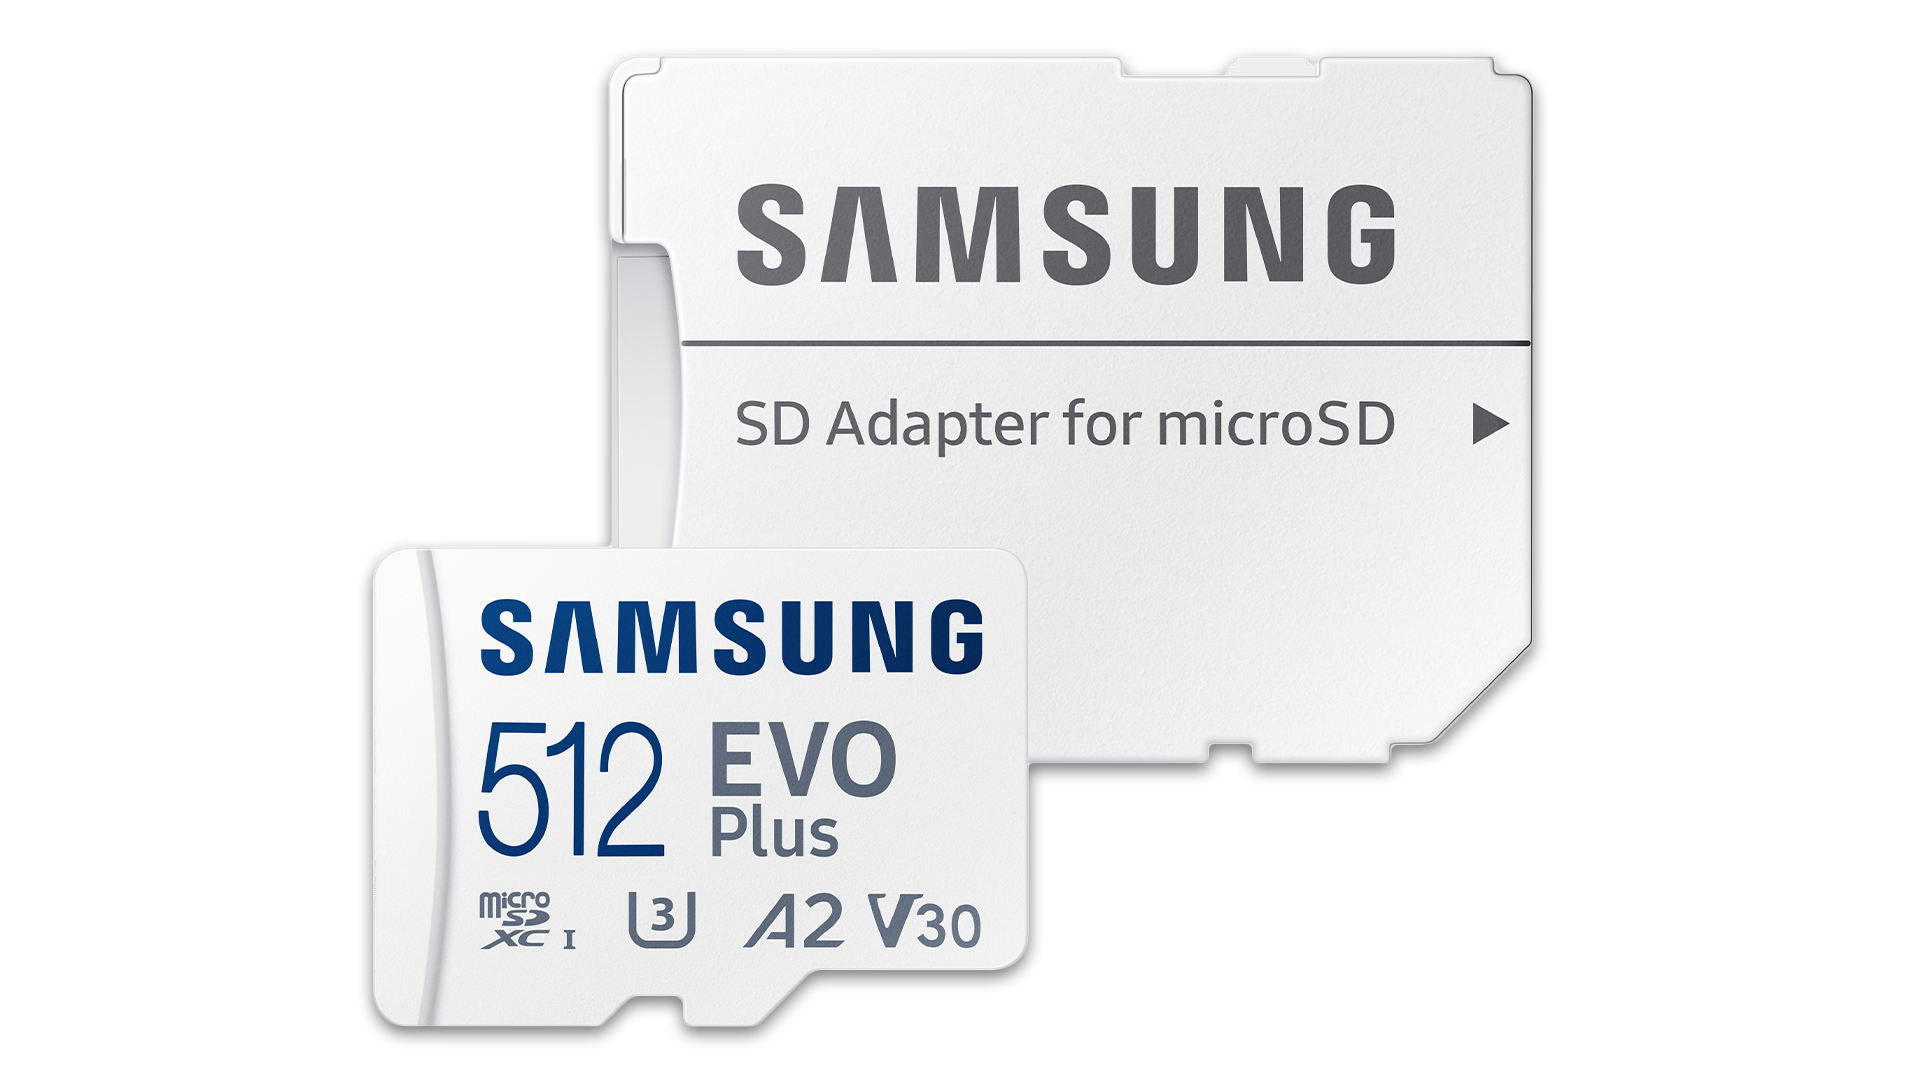 Samsung EVO Plus microSD card and adapter for regular SD card slot.